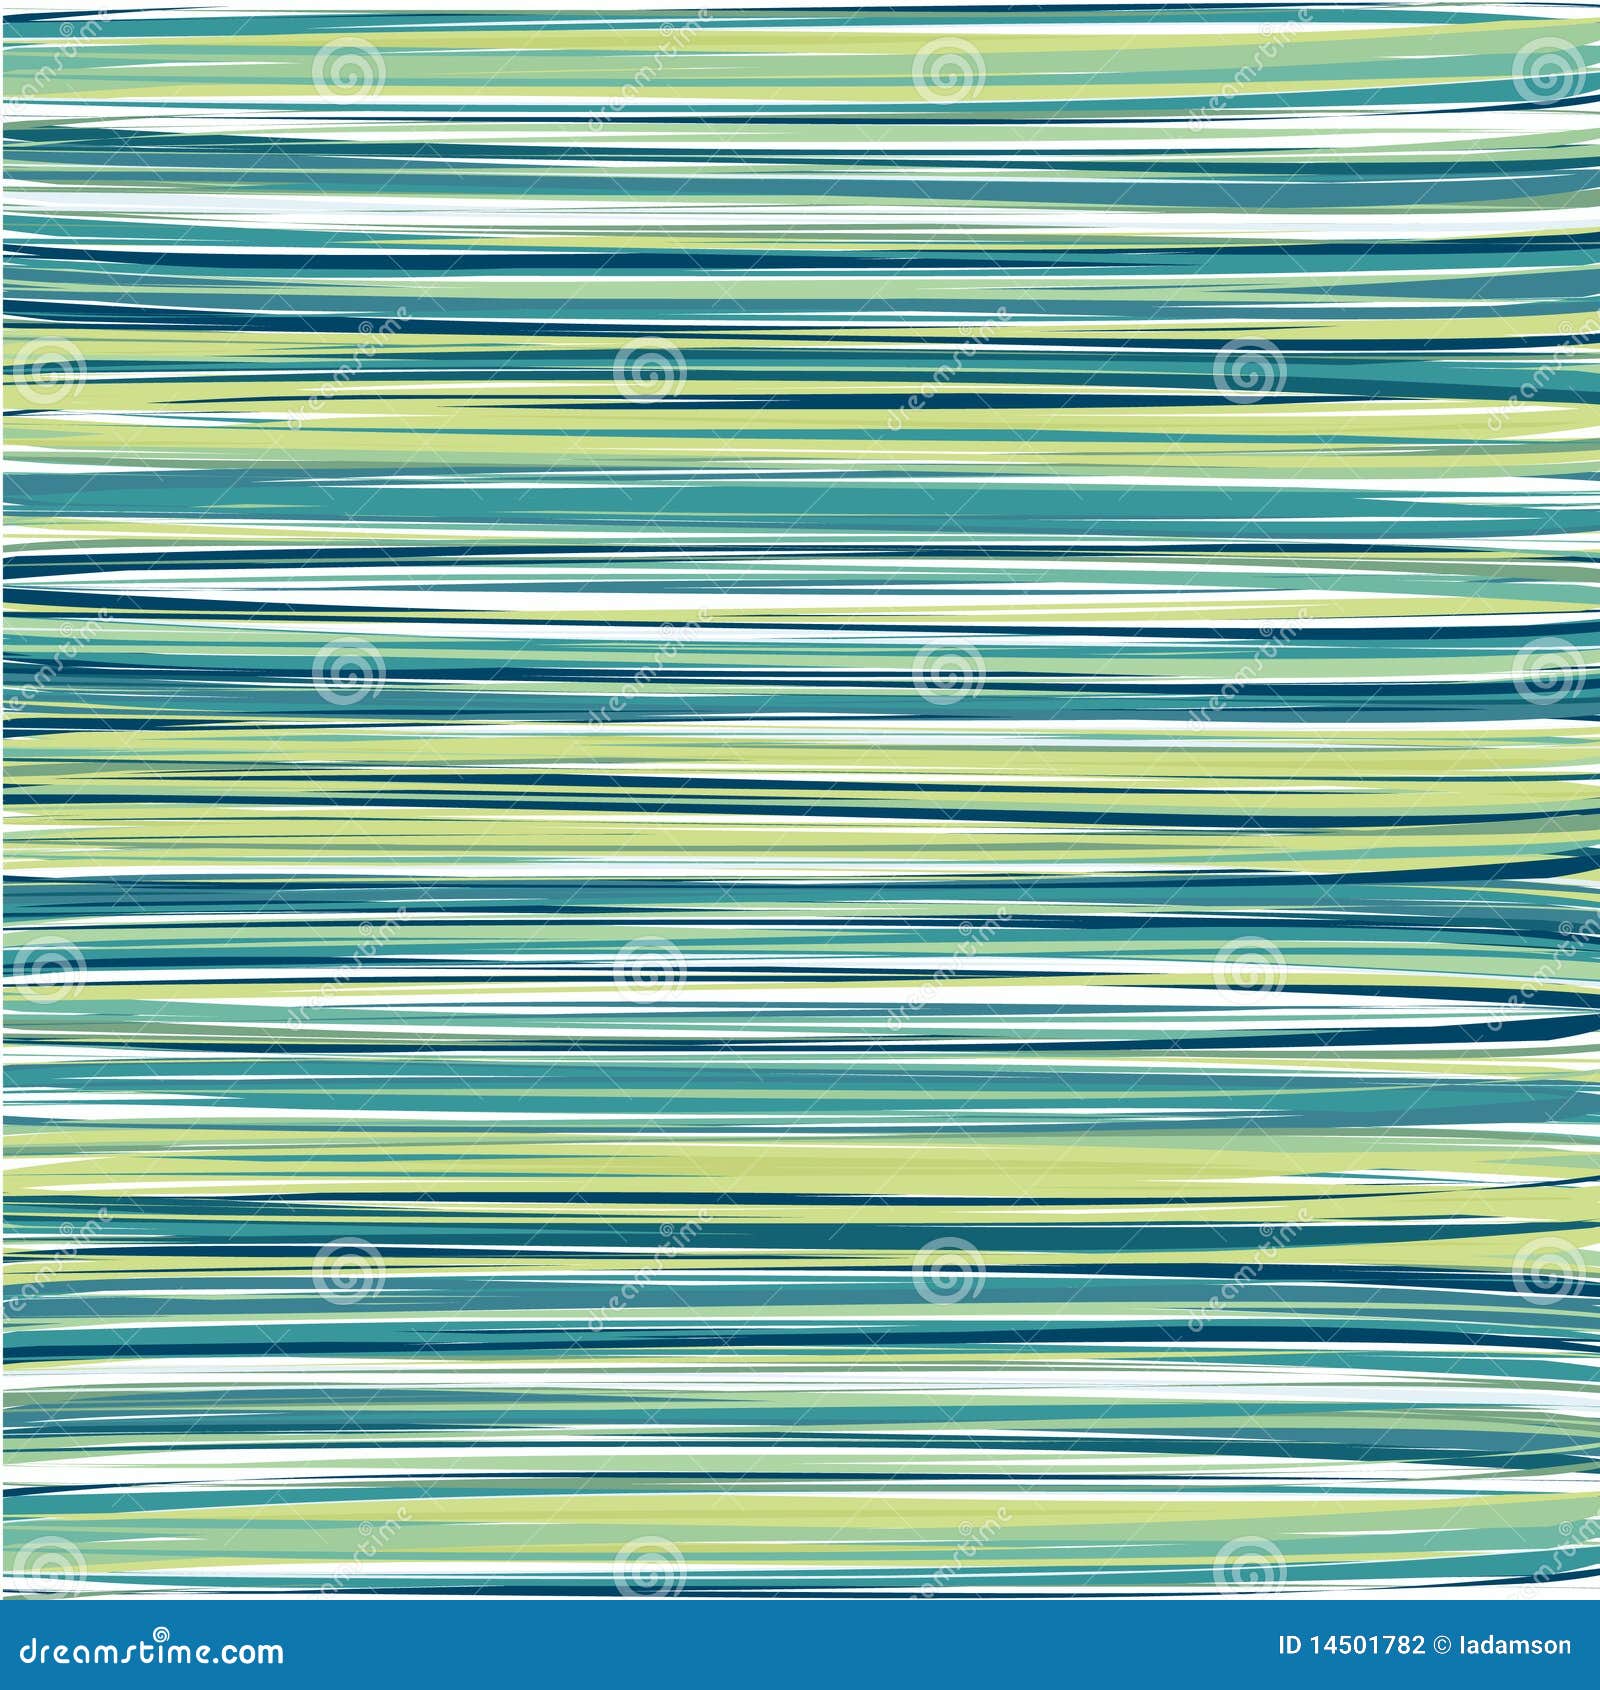 cyan-toned vertical striped pattern. 